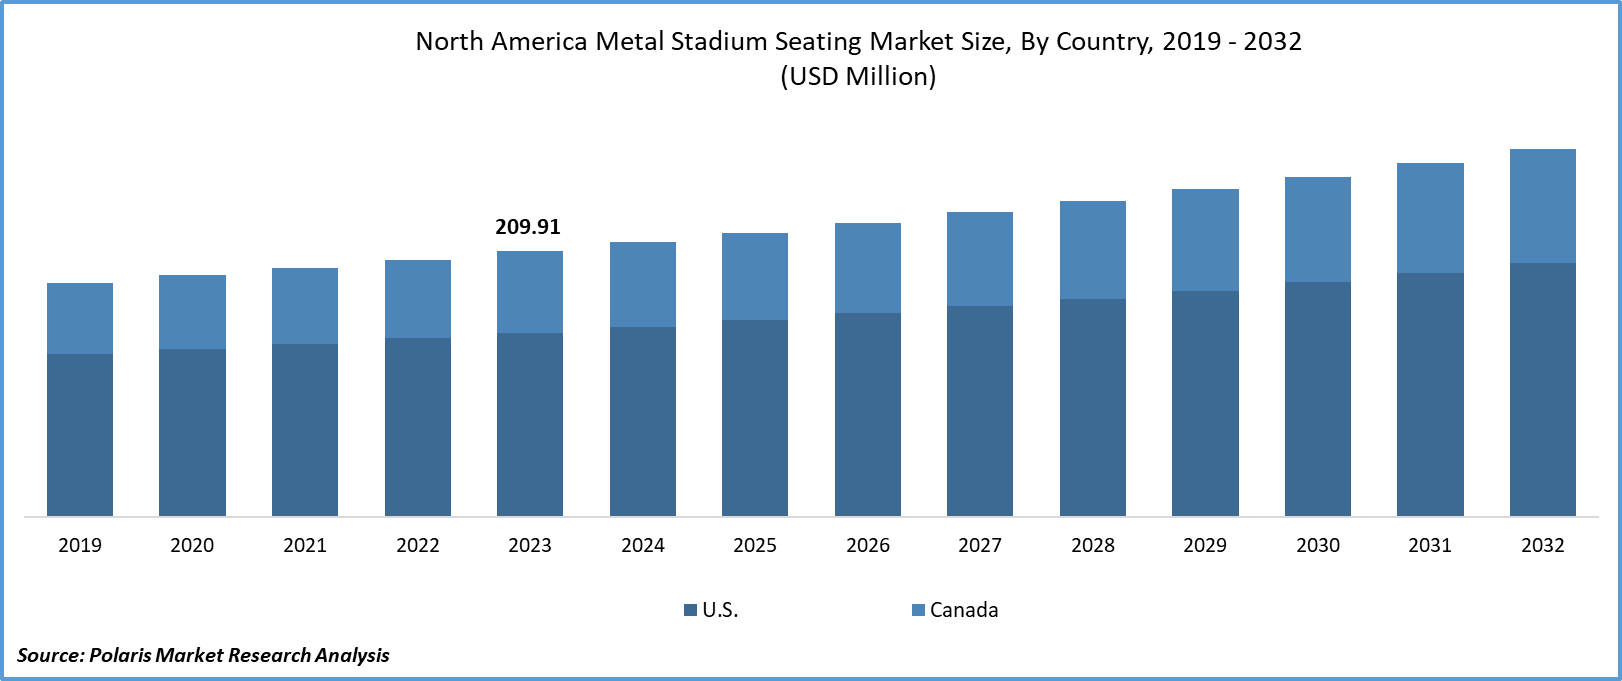 North America Metal Stadium Seating Market Size